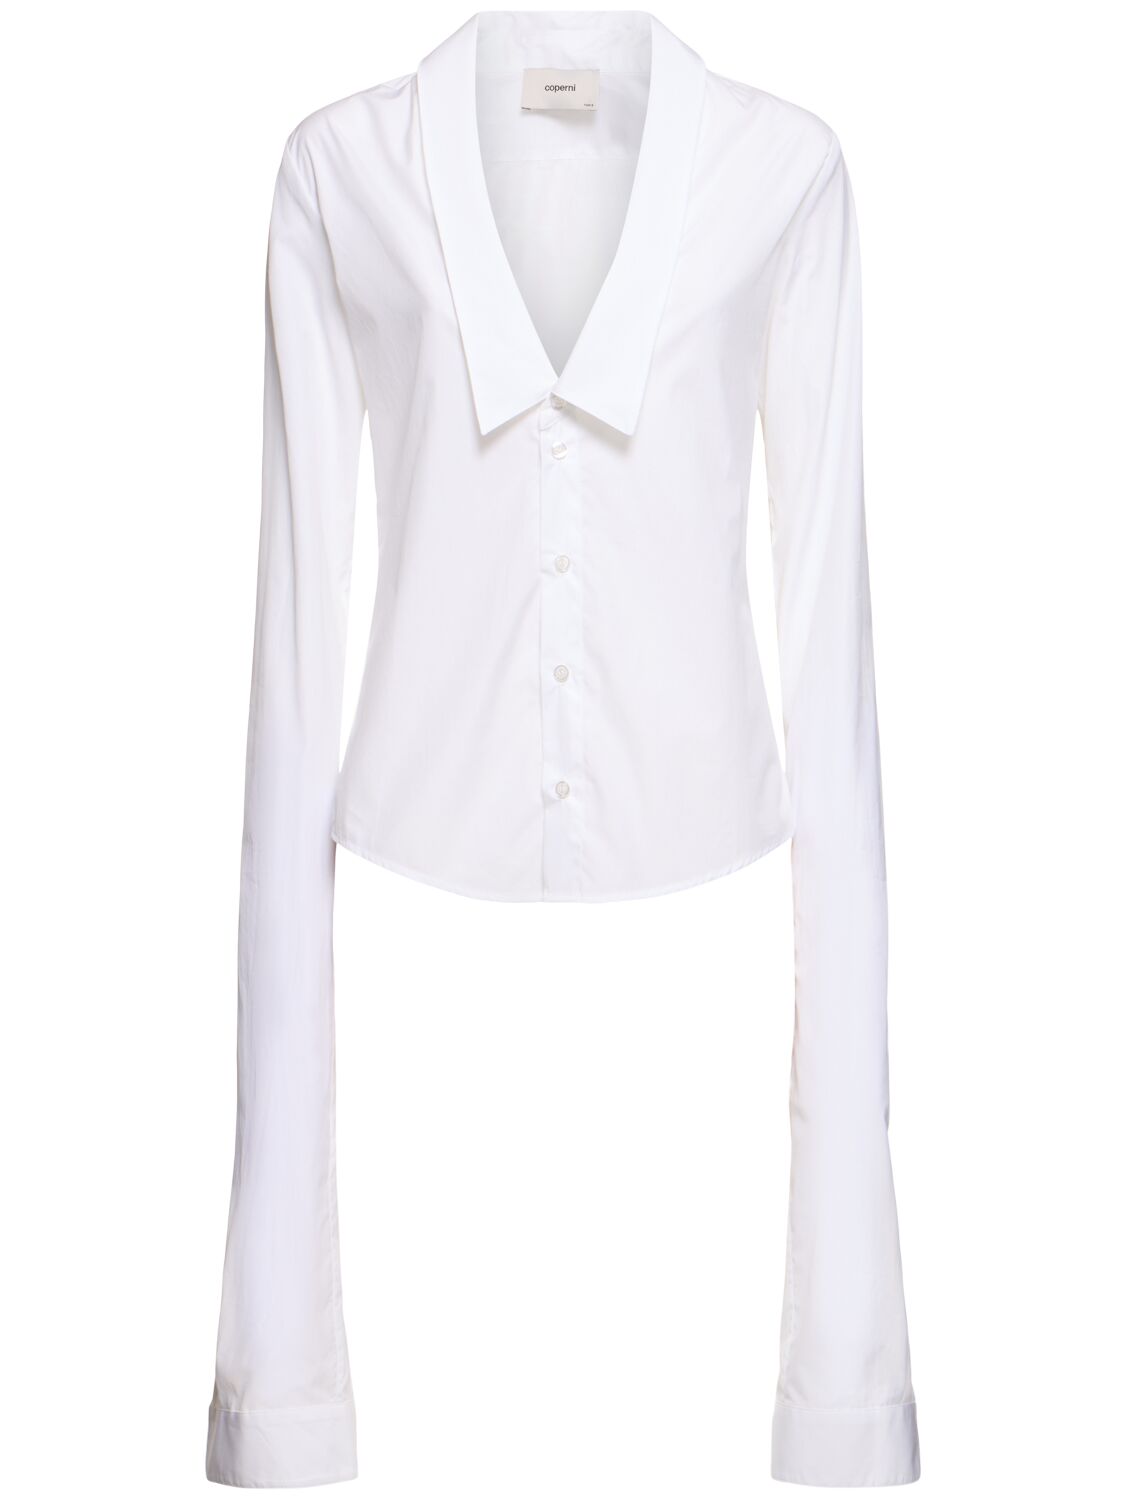 Coperni Open Collar Cotton Shirt In White